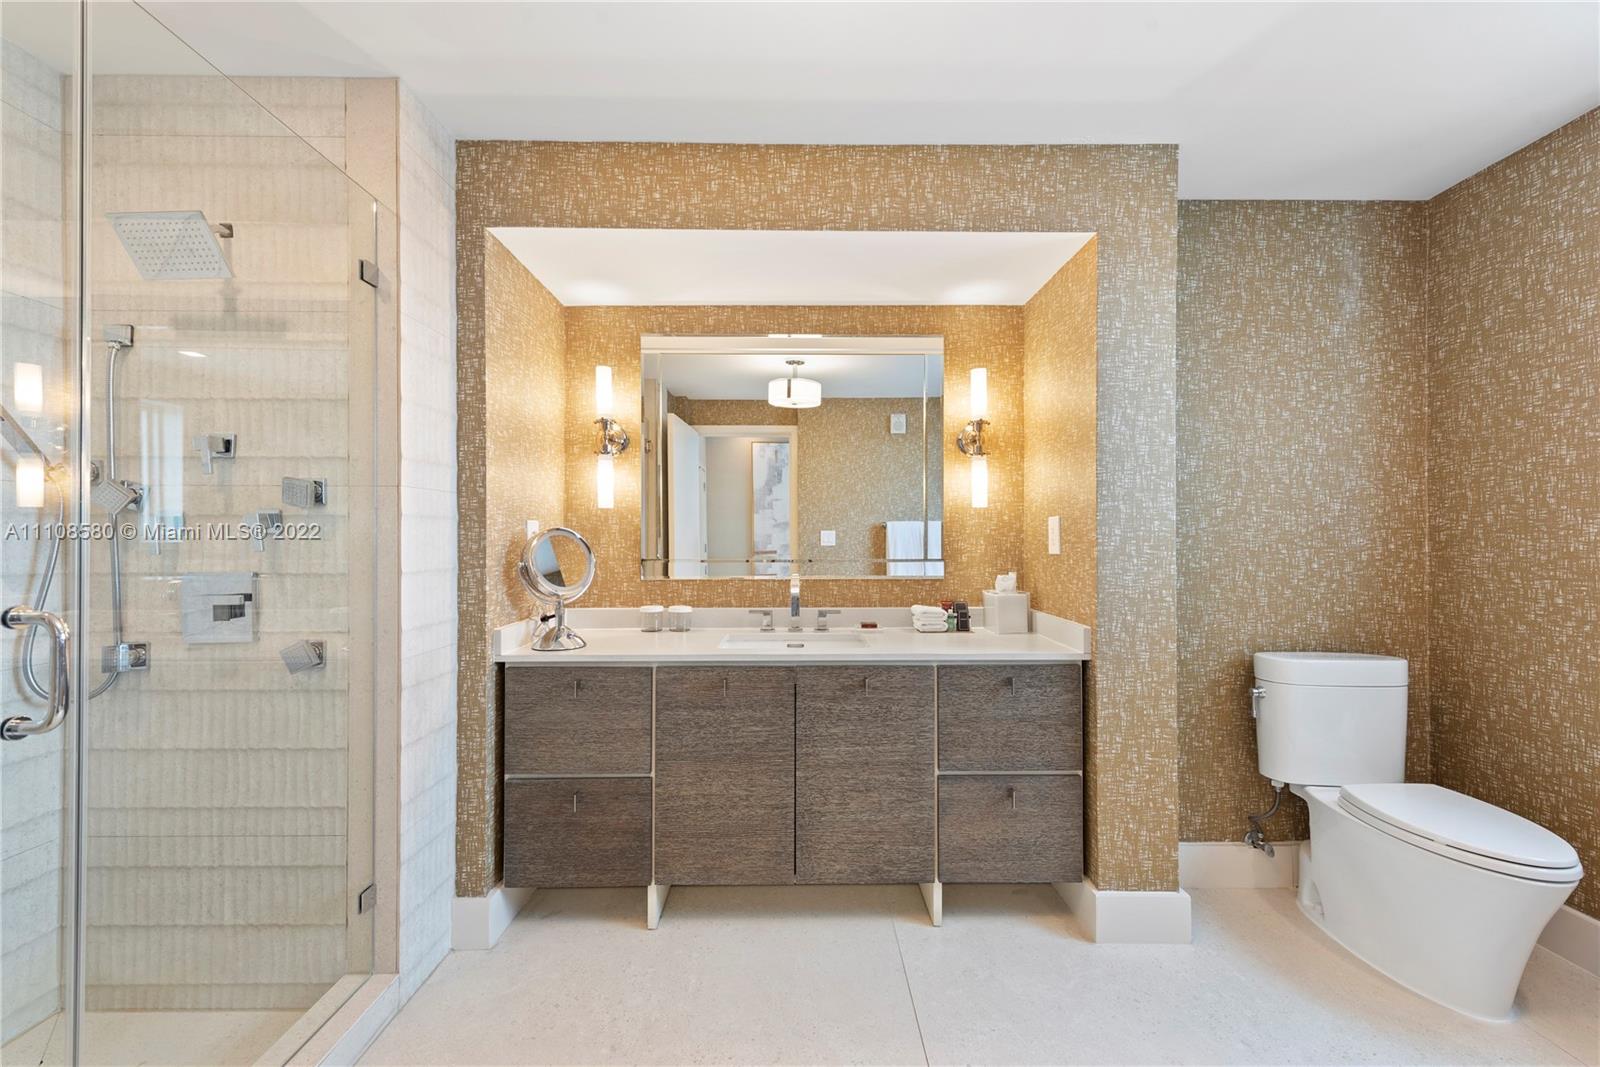 Bathroom with beautiful designs!